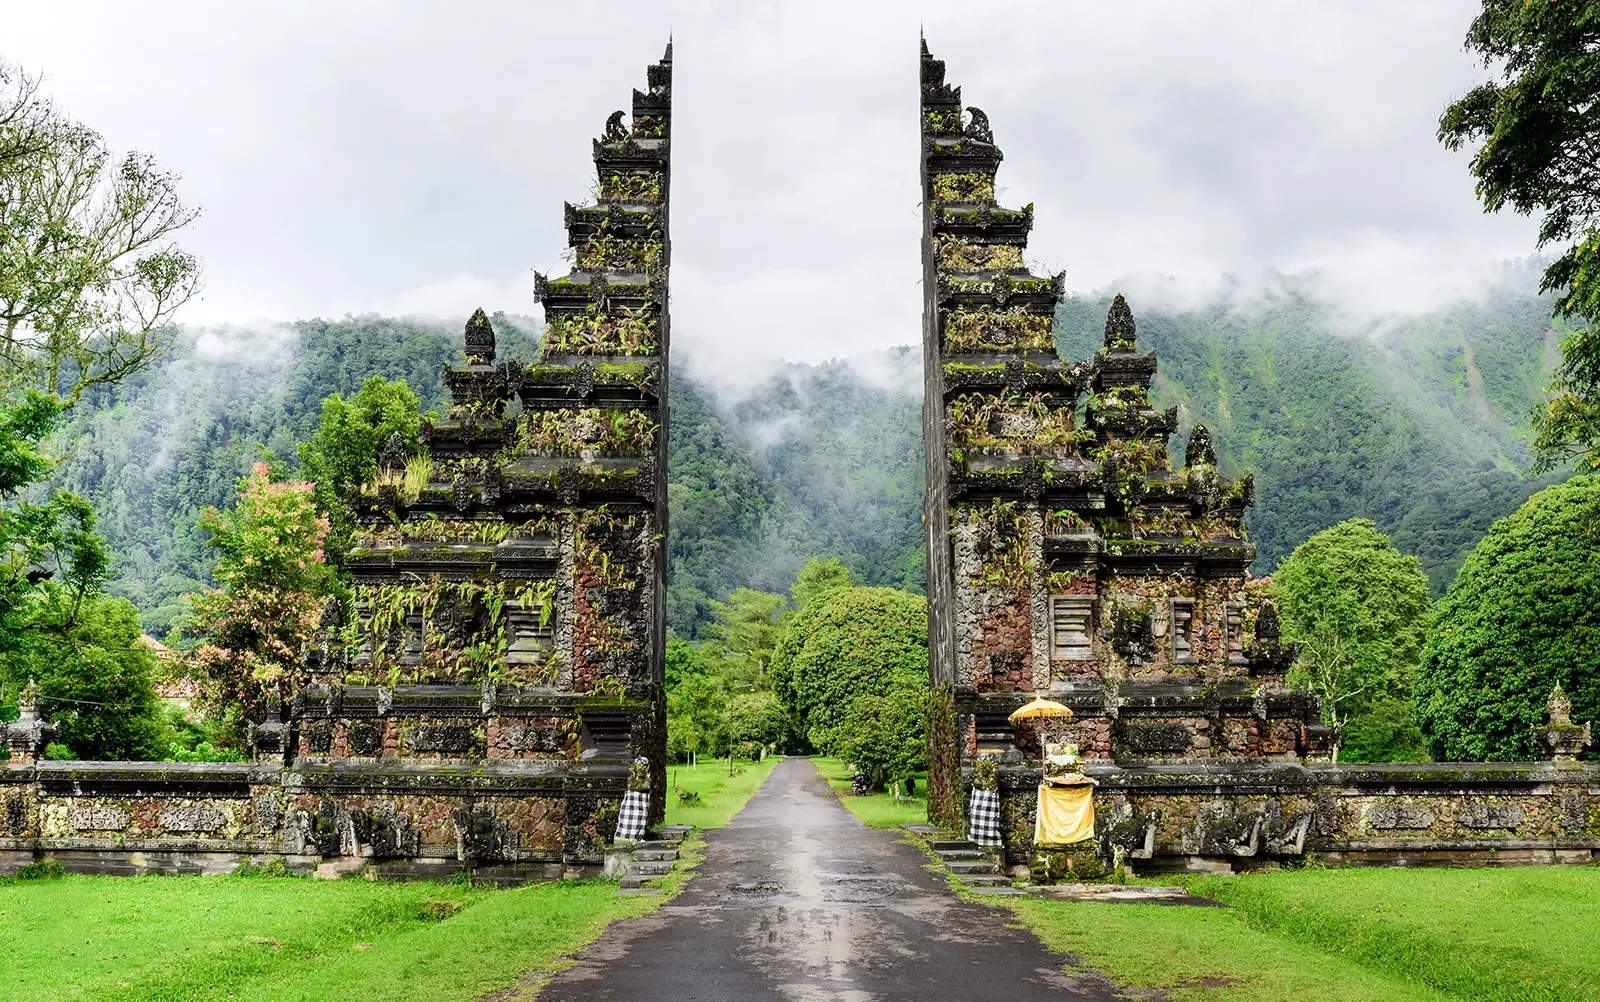 Shot of shrine/gateway in Bali, forest behind.